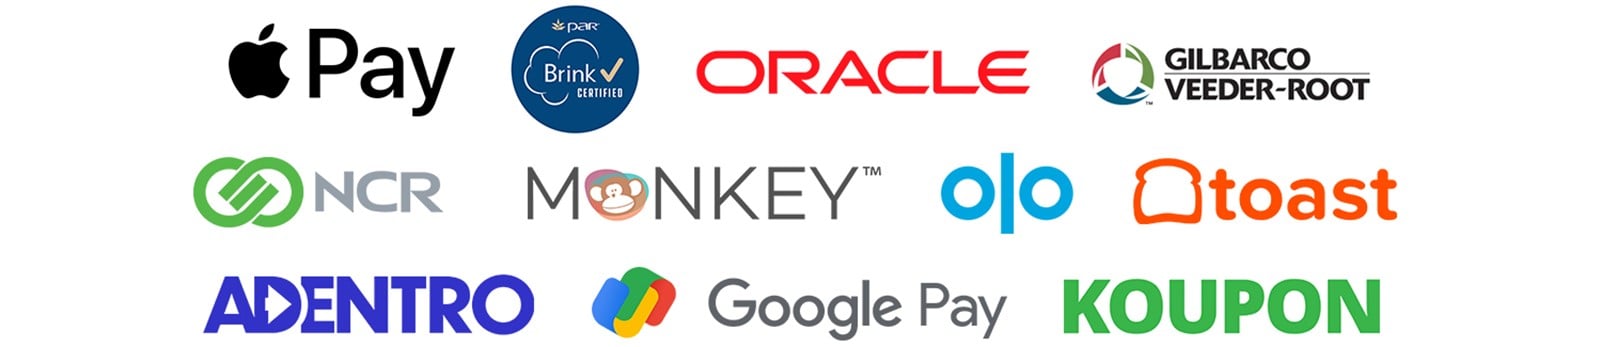 Paytronix Partner Logos